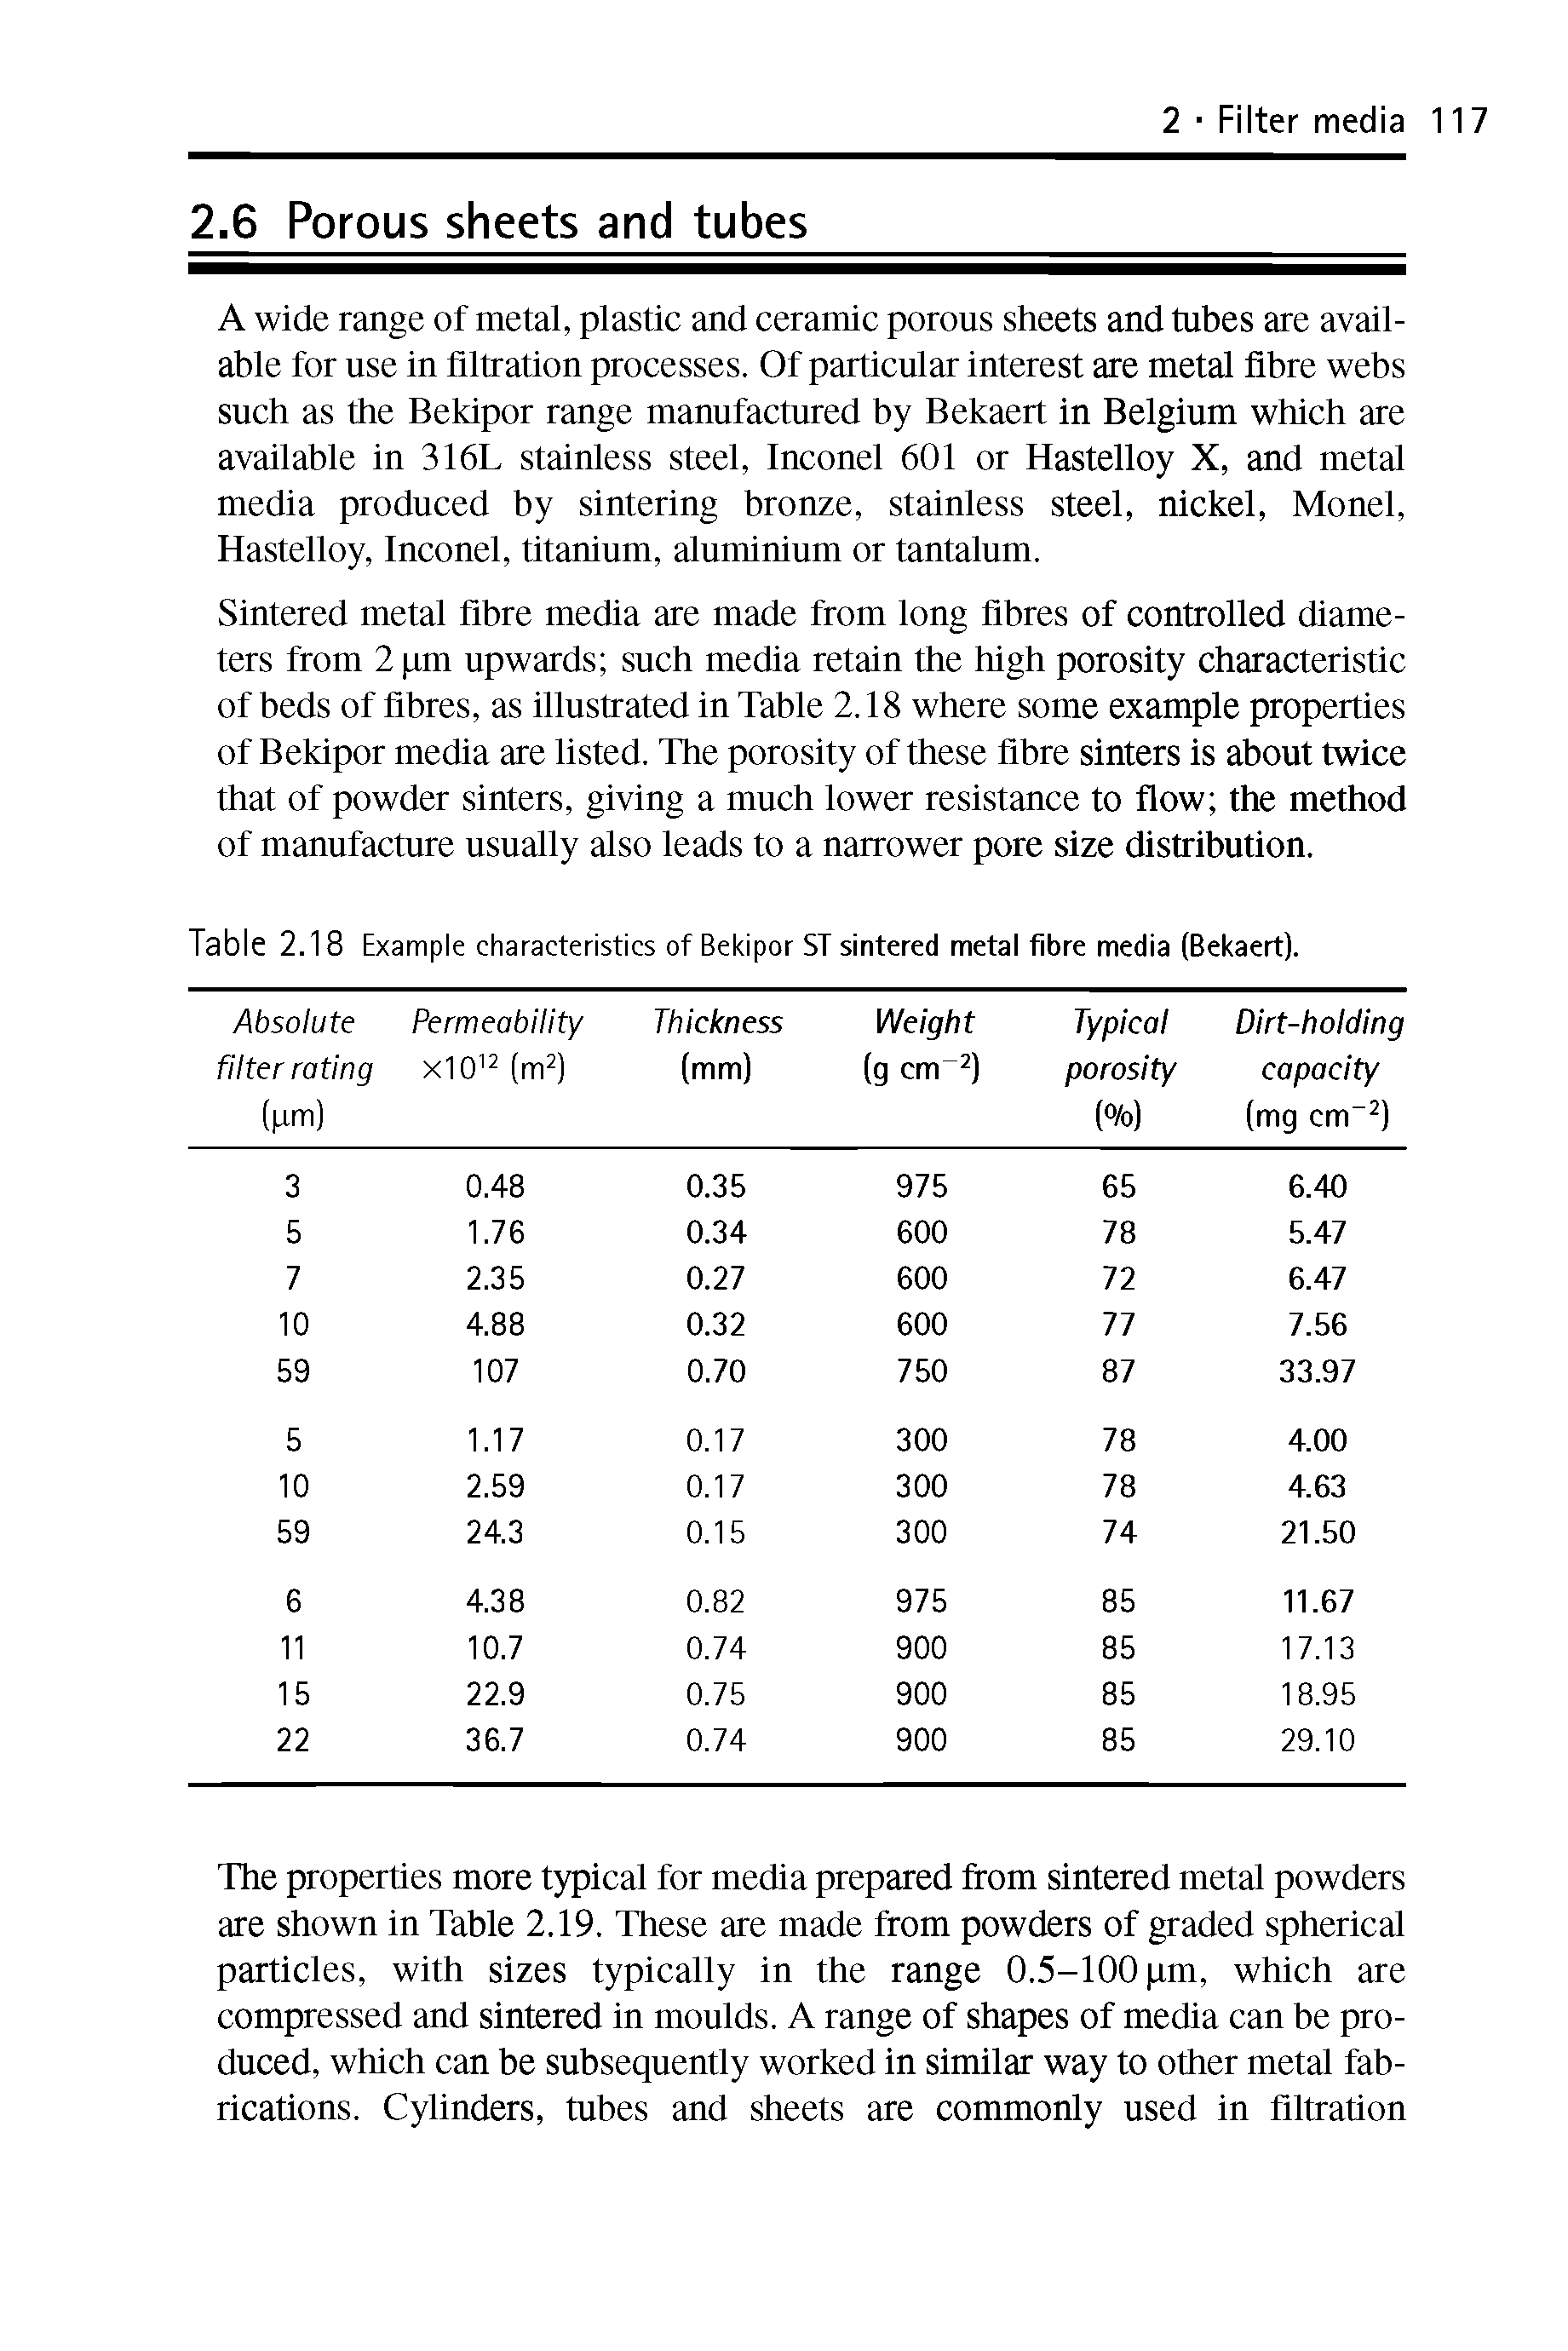 Table 2.18 Example characteristics of Bekipor ST sintered metal fibre media (Bekaert).